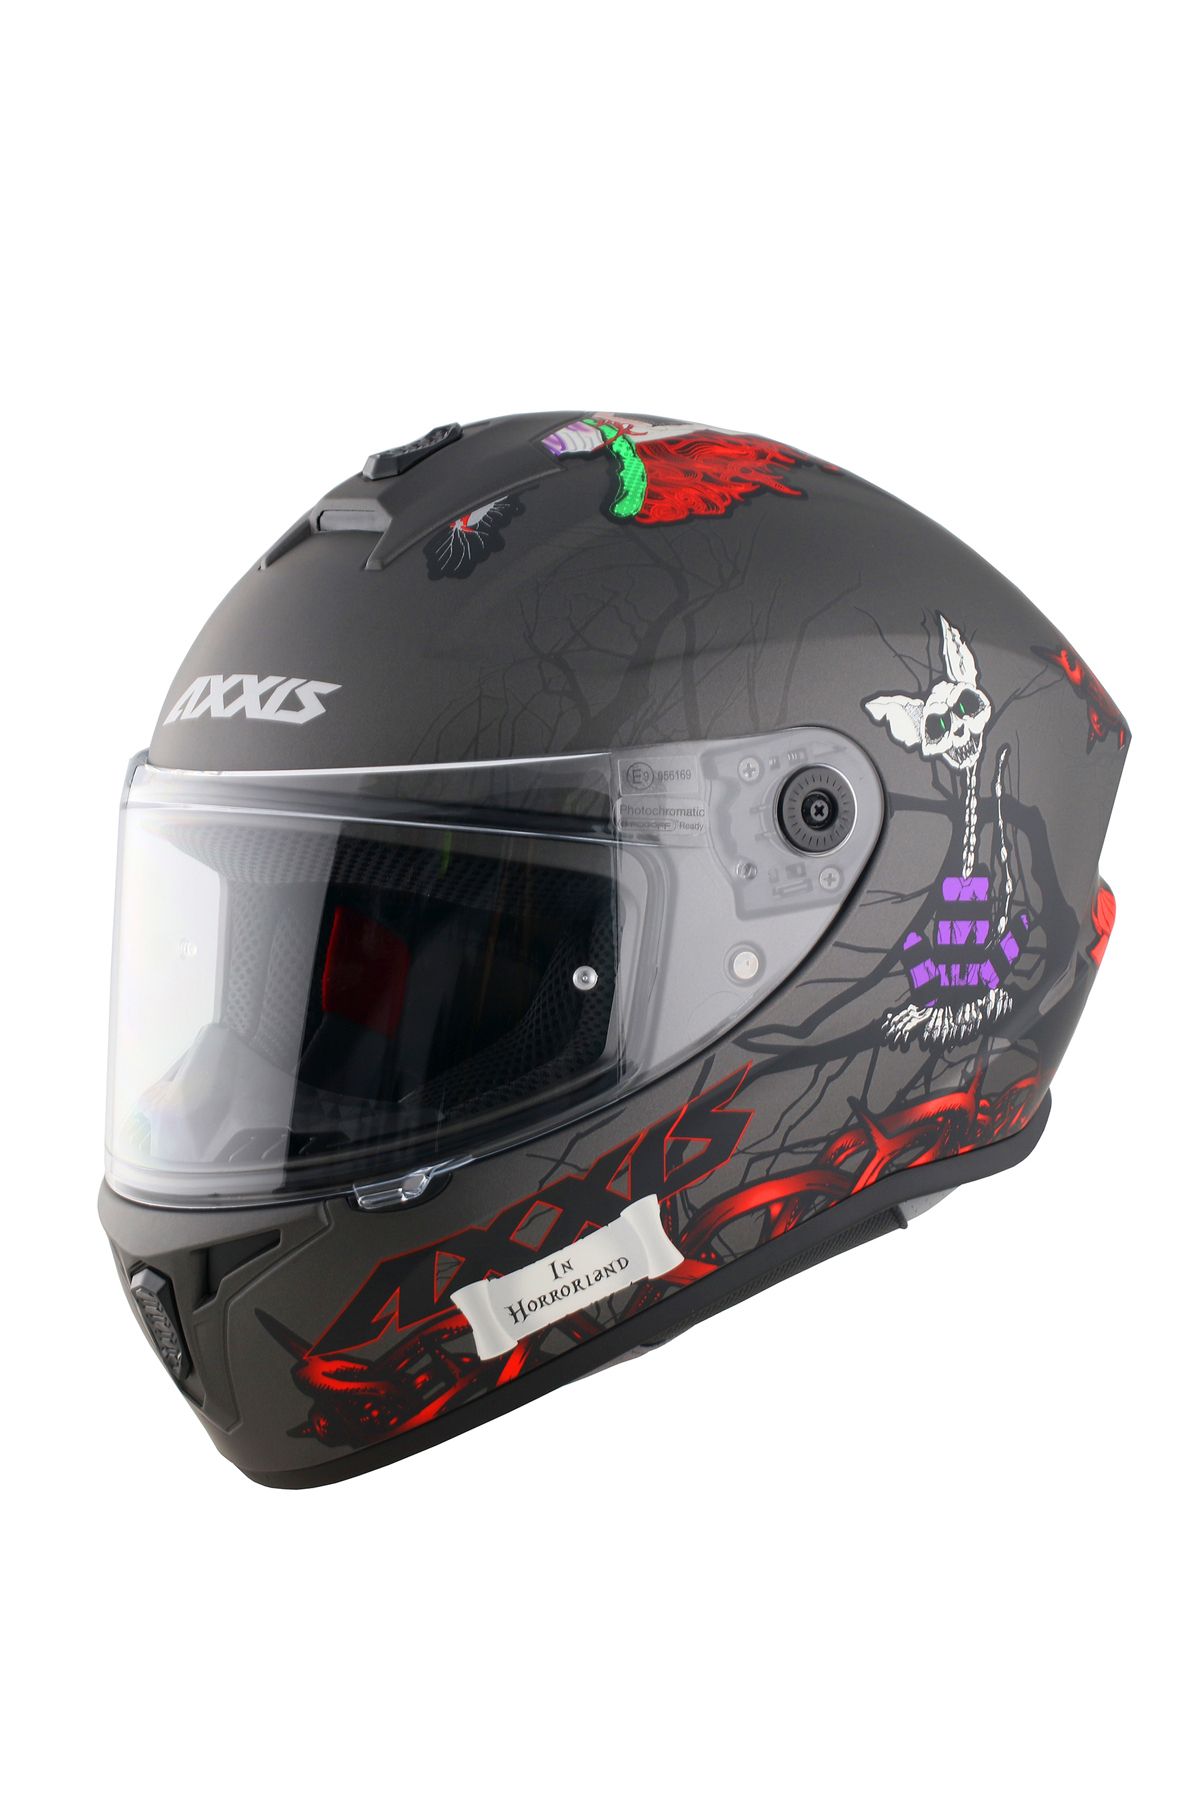 Axxis Draken S Horrorland A2 Matt Titanium Kapalı Motosiklet Kaskı + Yedek Siyah Vizör